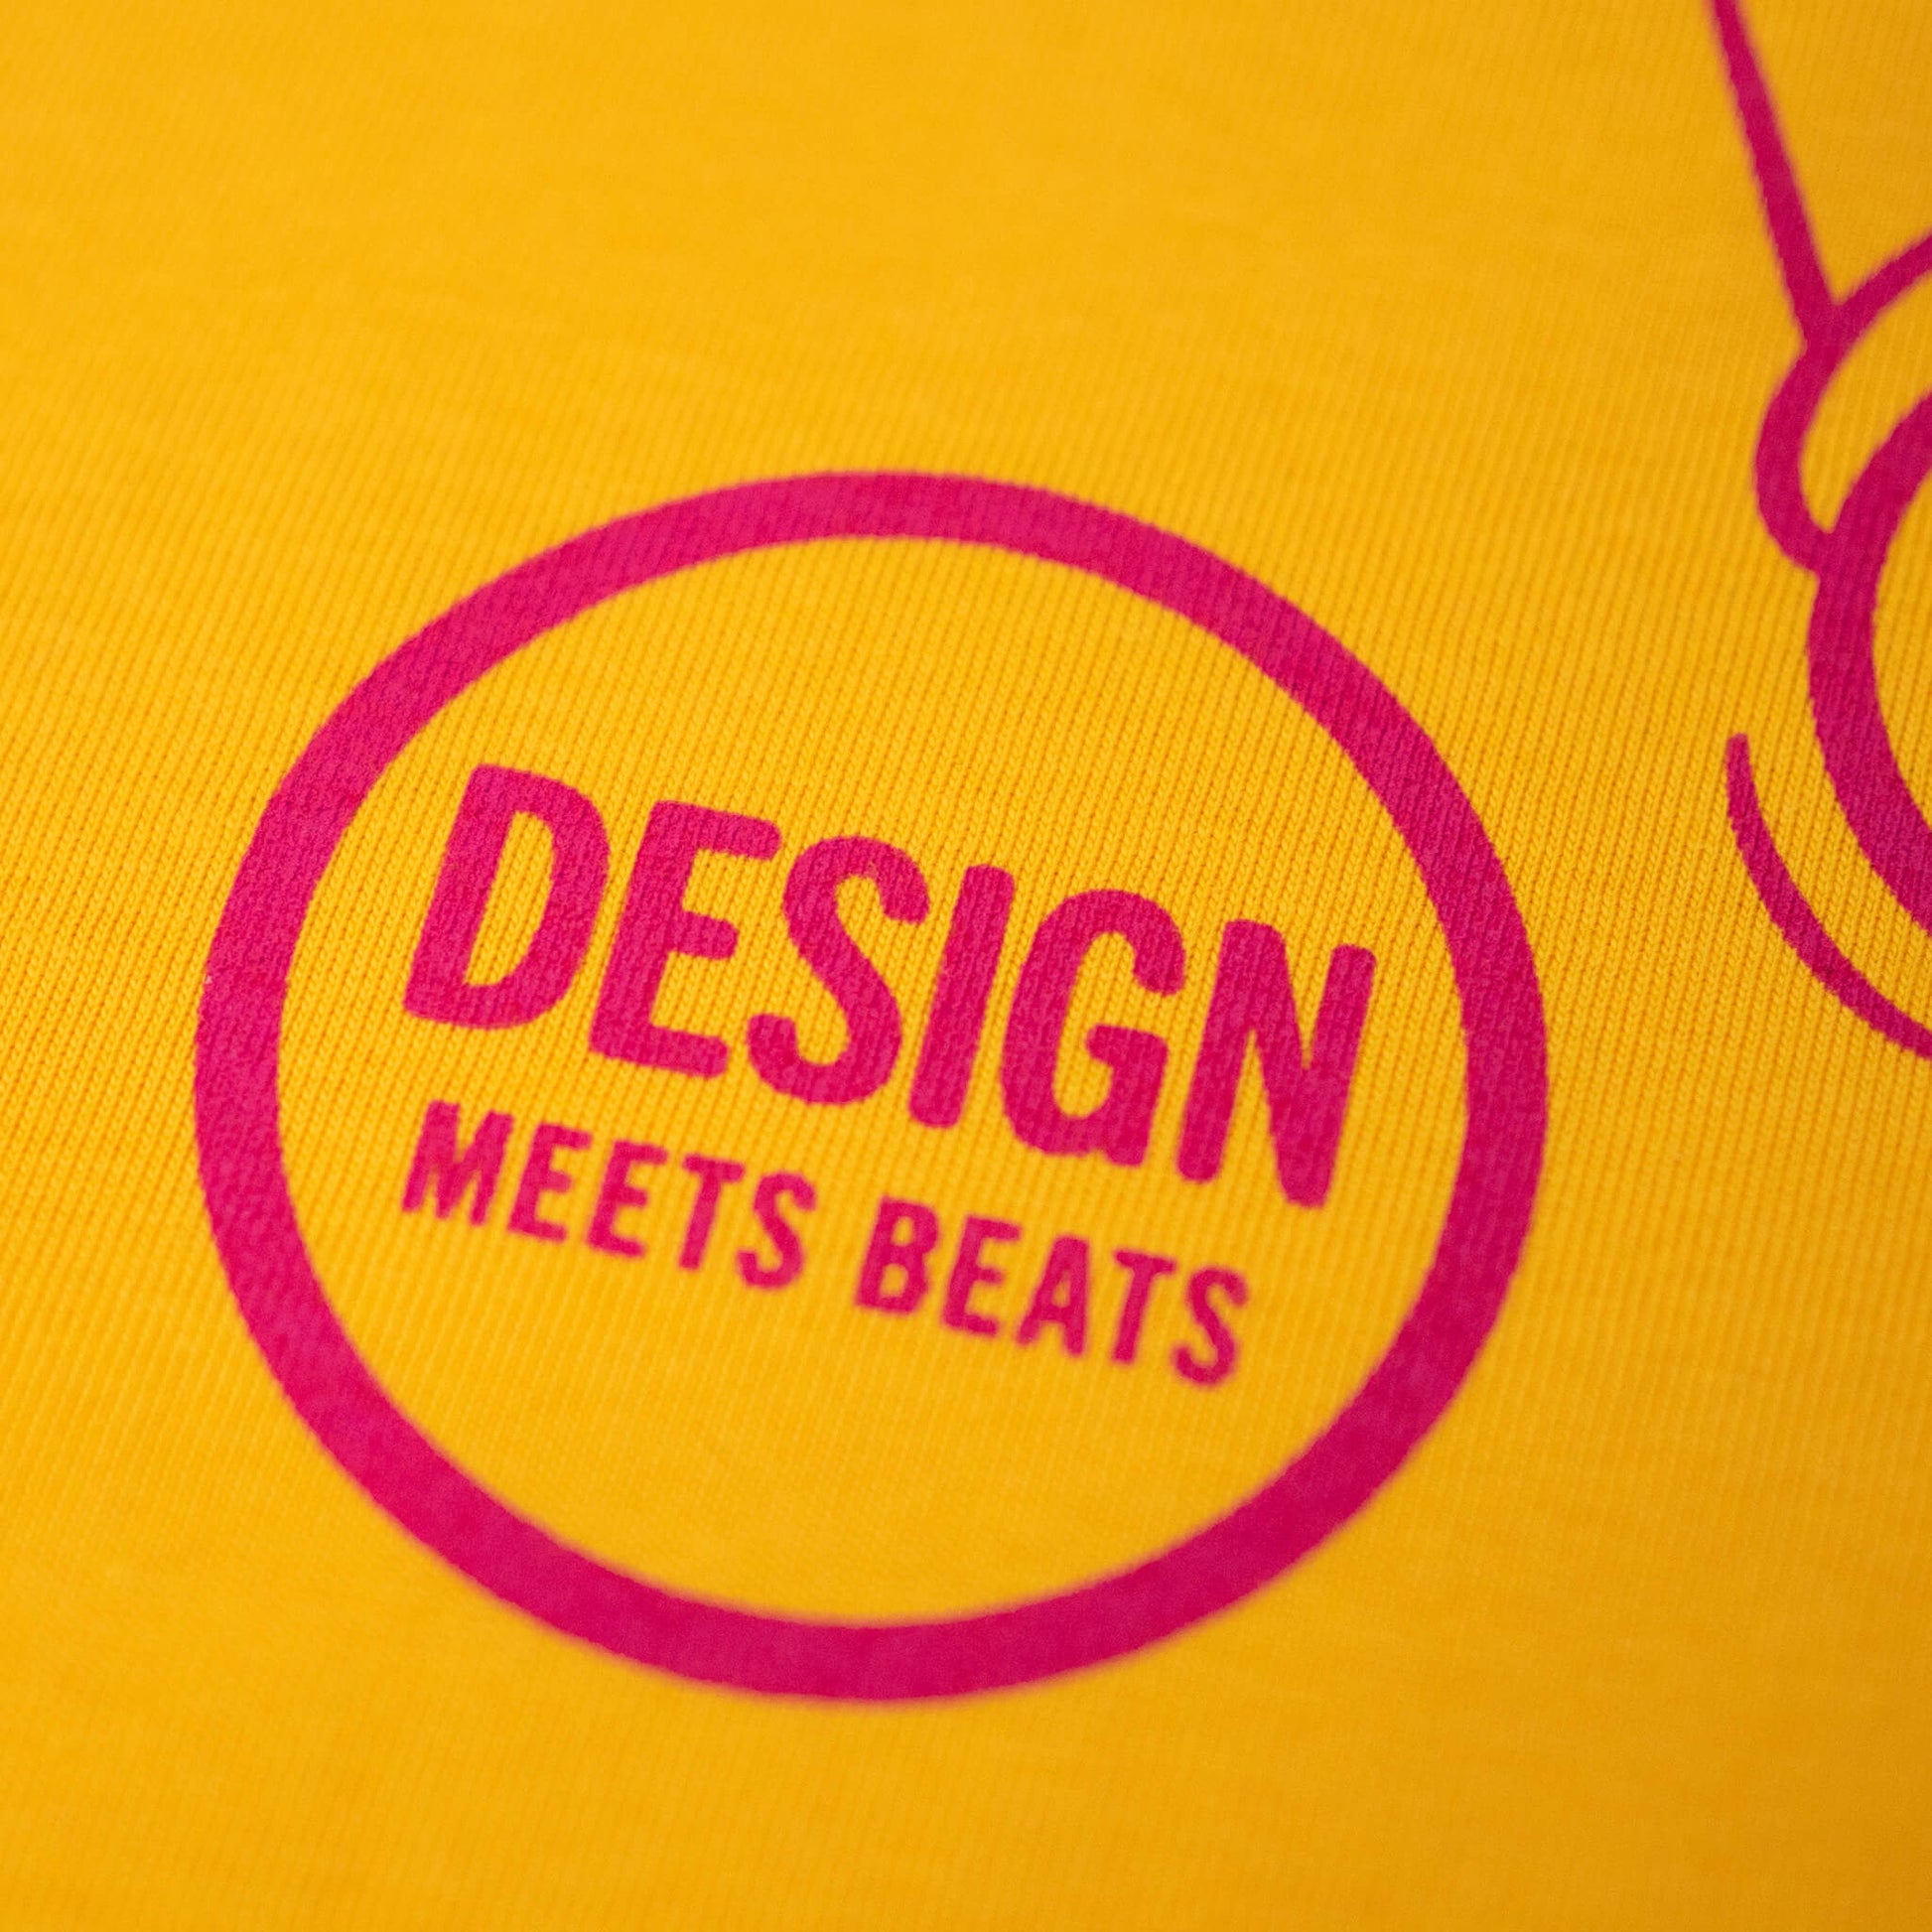 Design meets beats screen printed yellow t-shirt detail